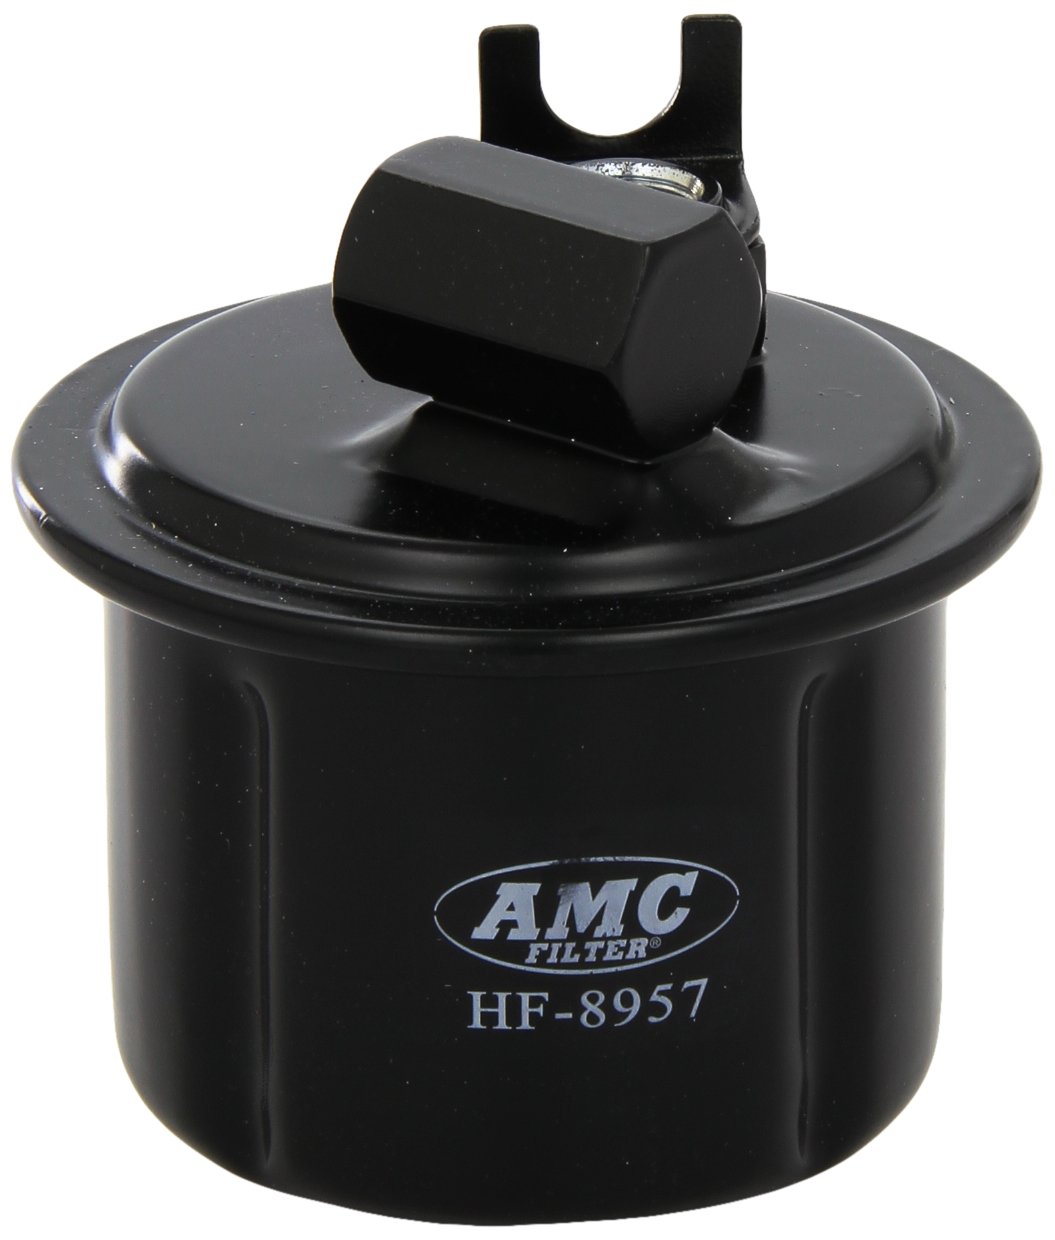 AMC Filter HF-8957 Kraftstoff Filter von AMC